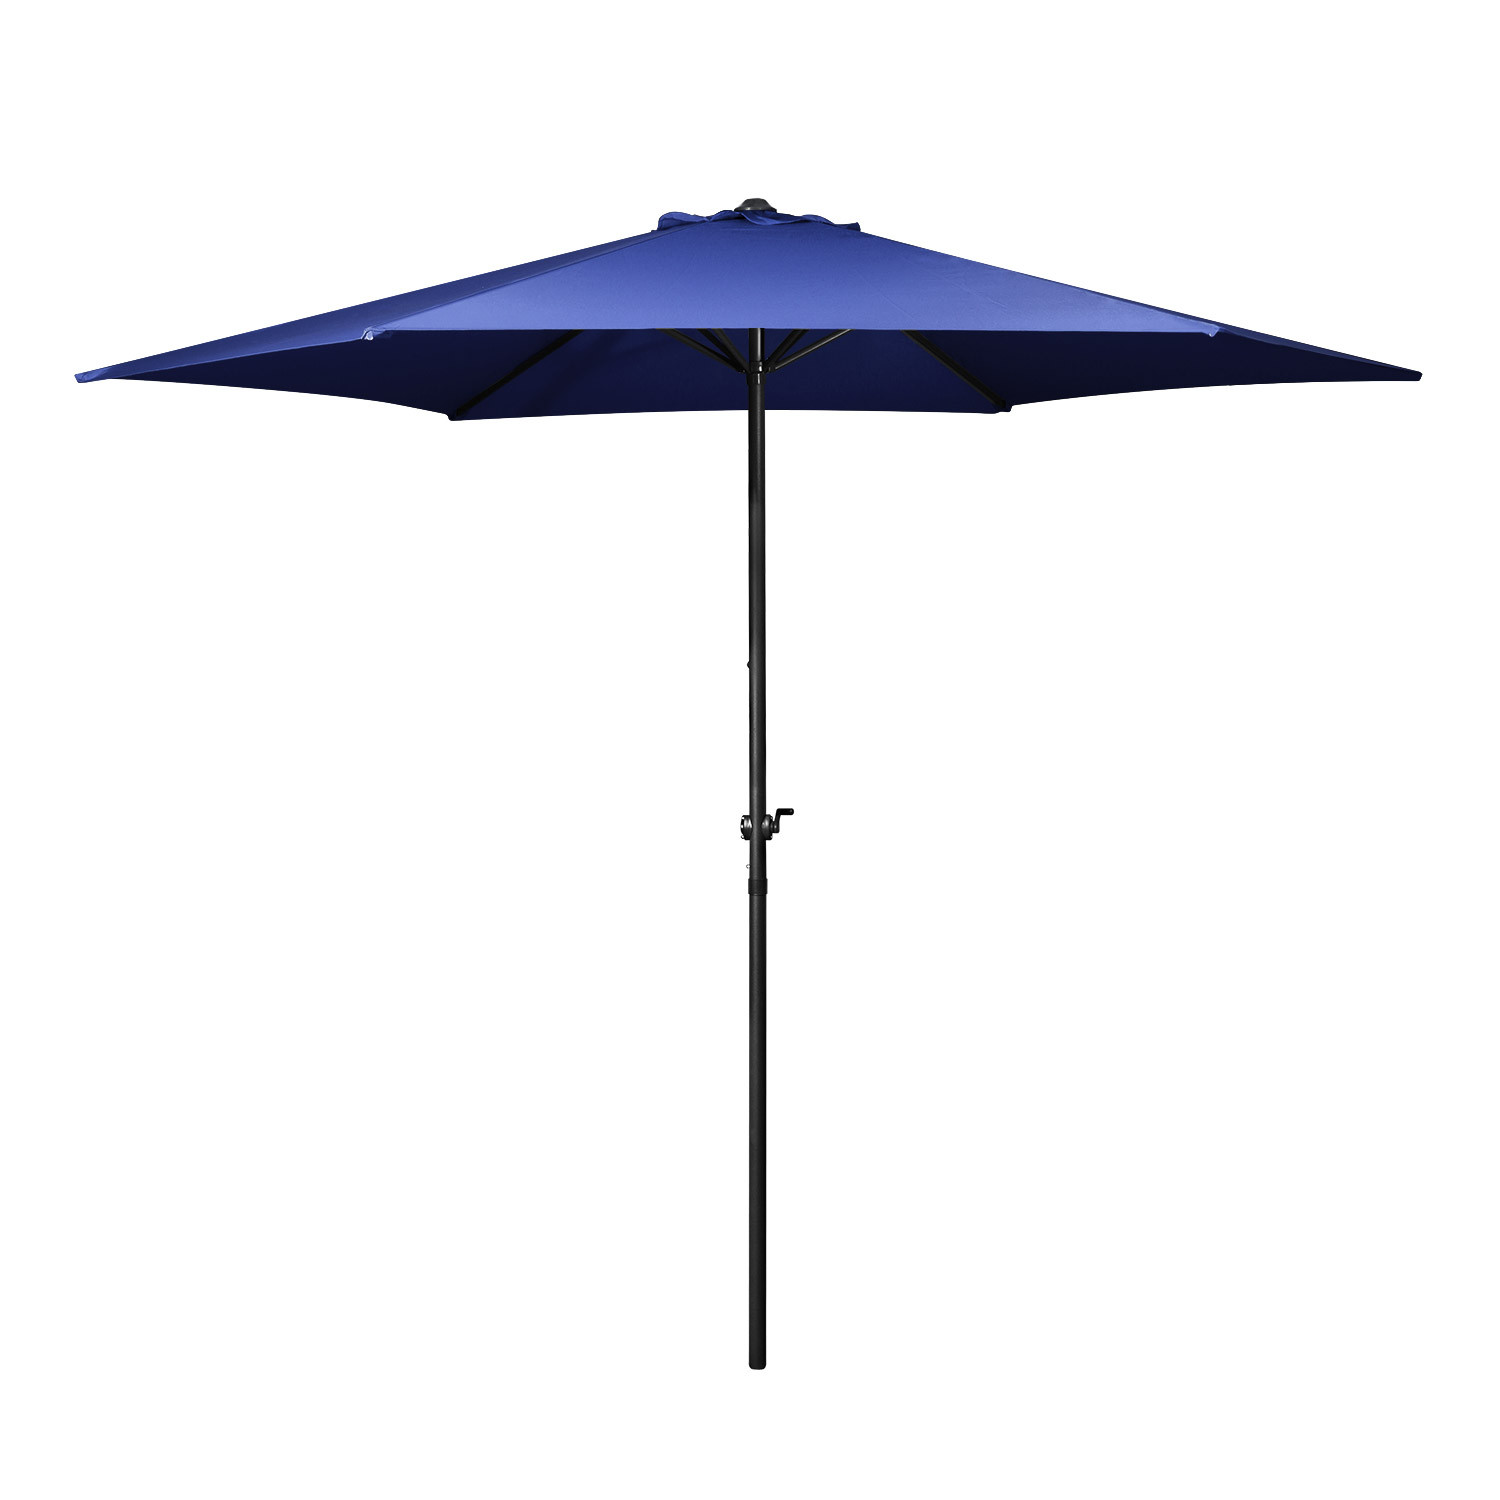 Best ideas about Patio Table Umbrella
. Save or Pin 9 ft 10 ft Aluminum Umbrella Market Umbrella Table Patio Now.